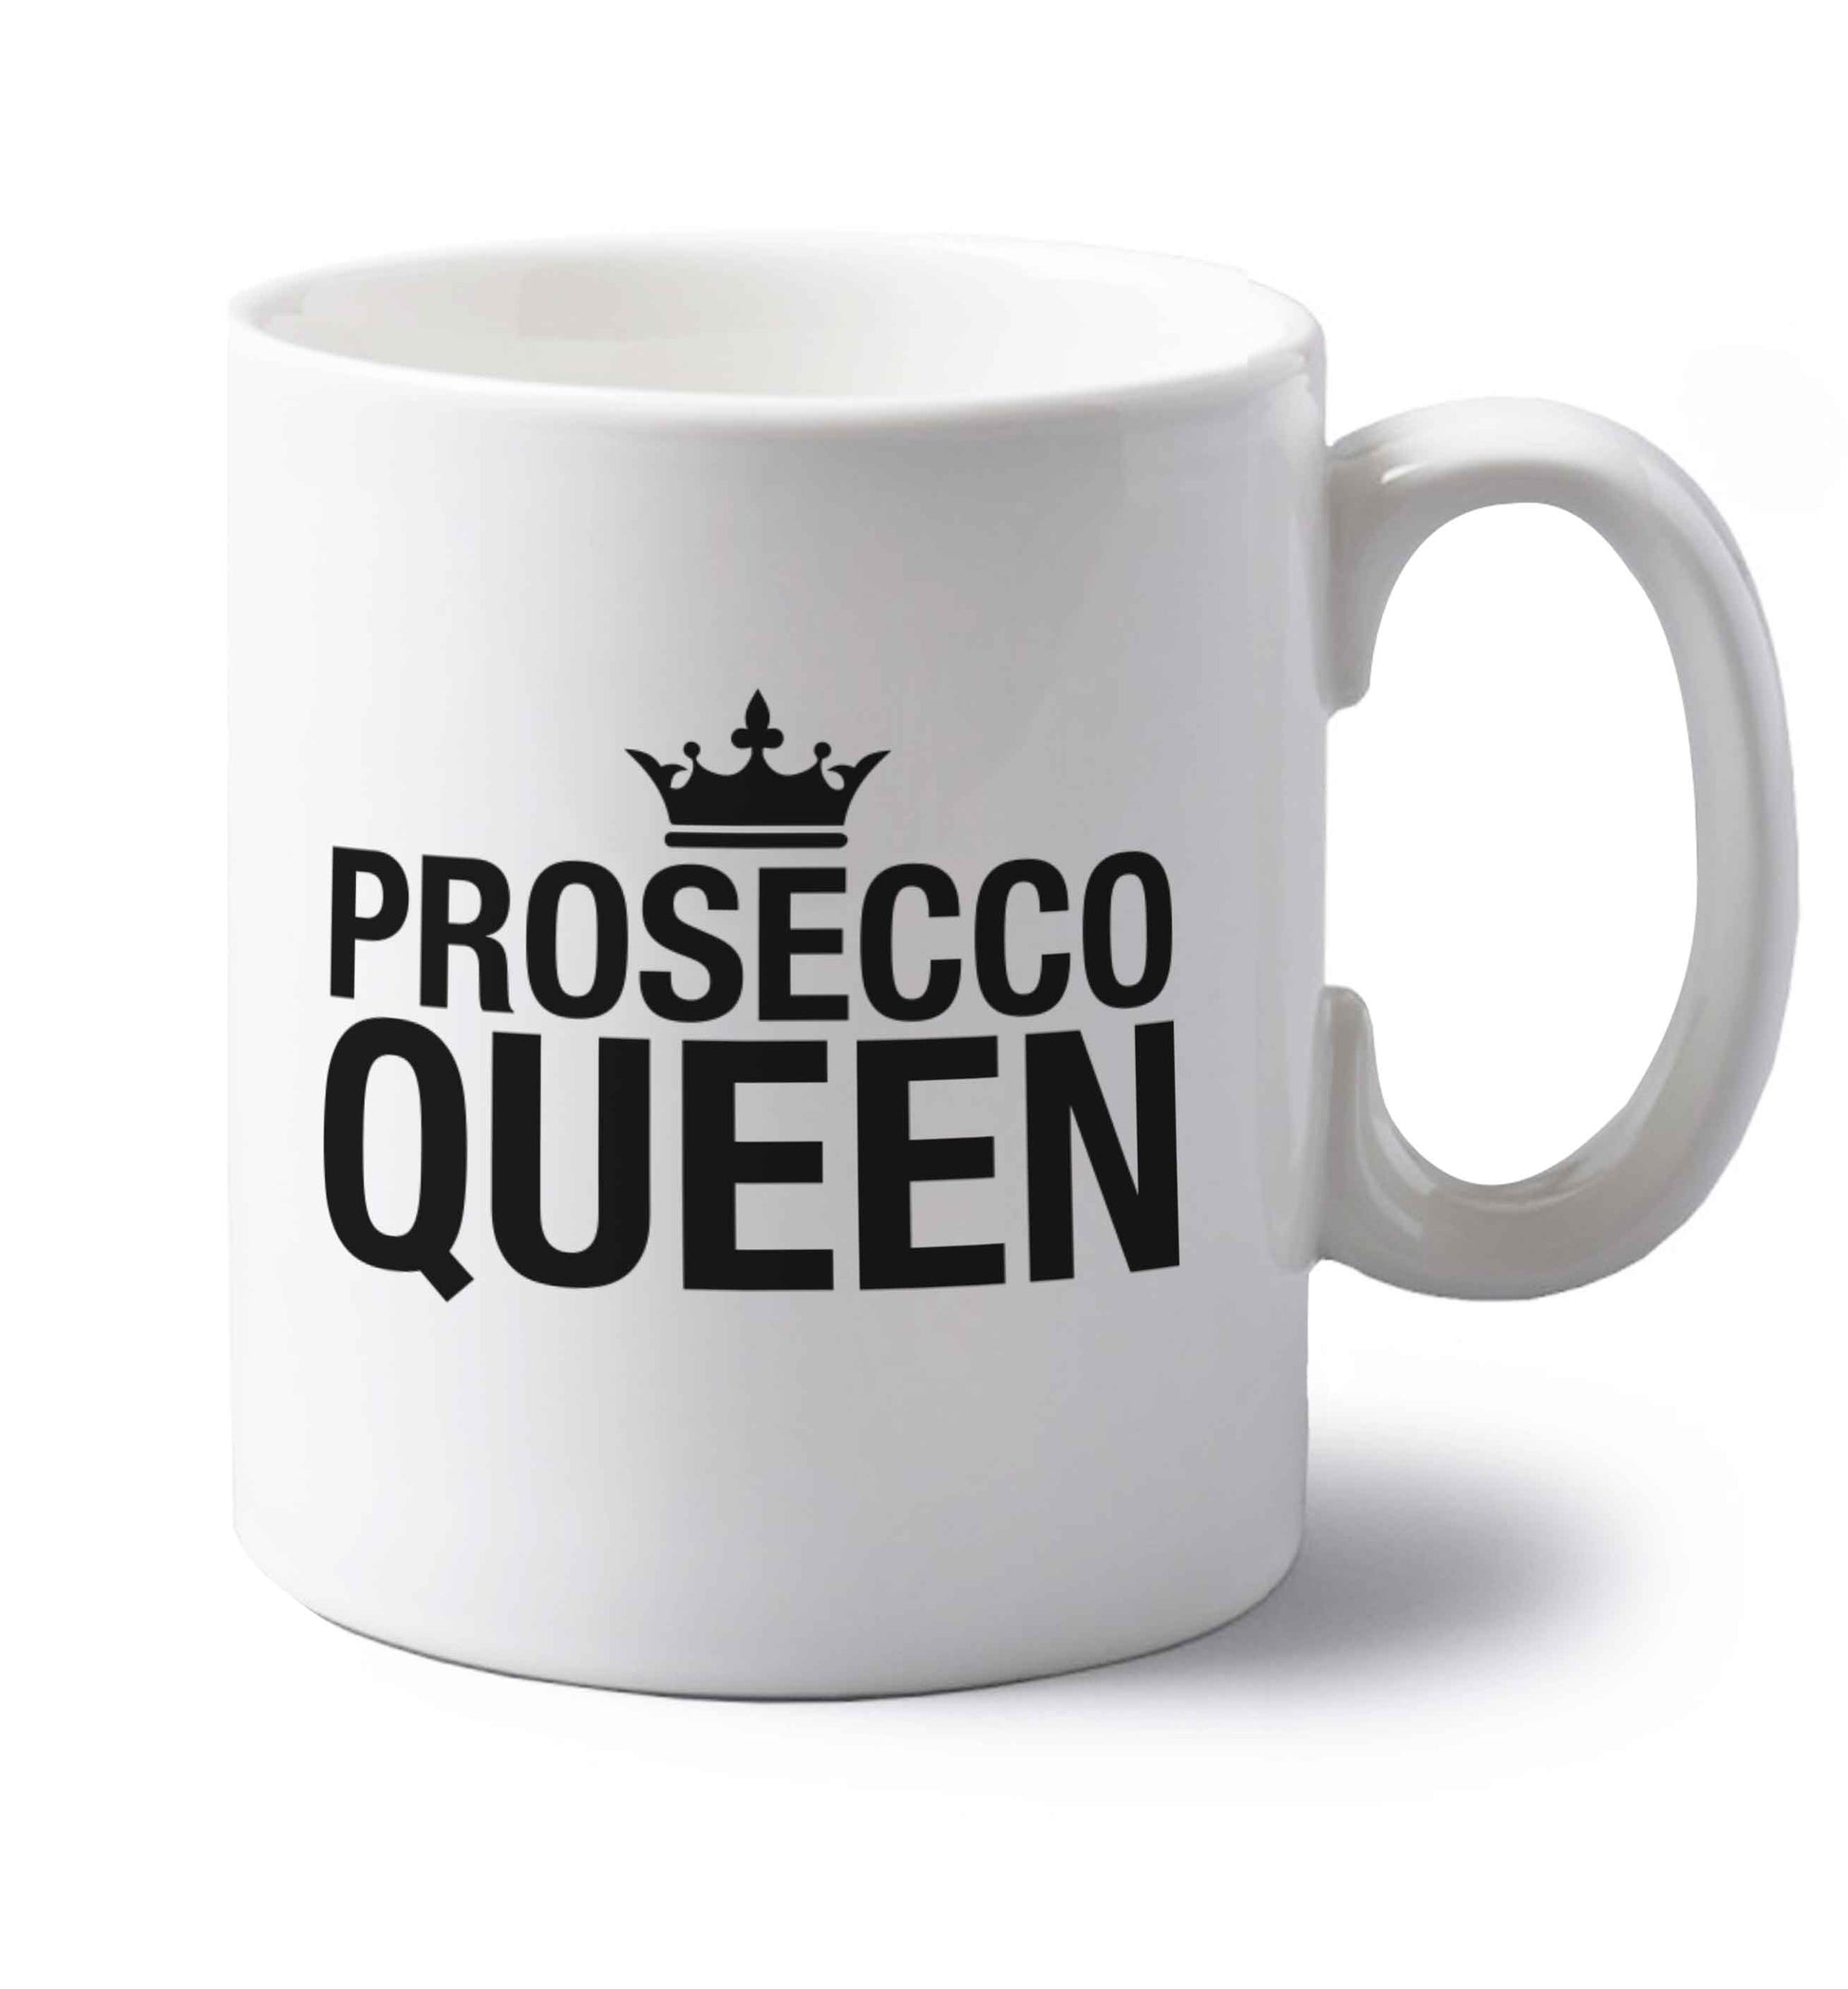 Prosecco queen left handed white ceramic mug 